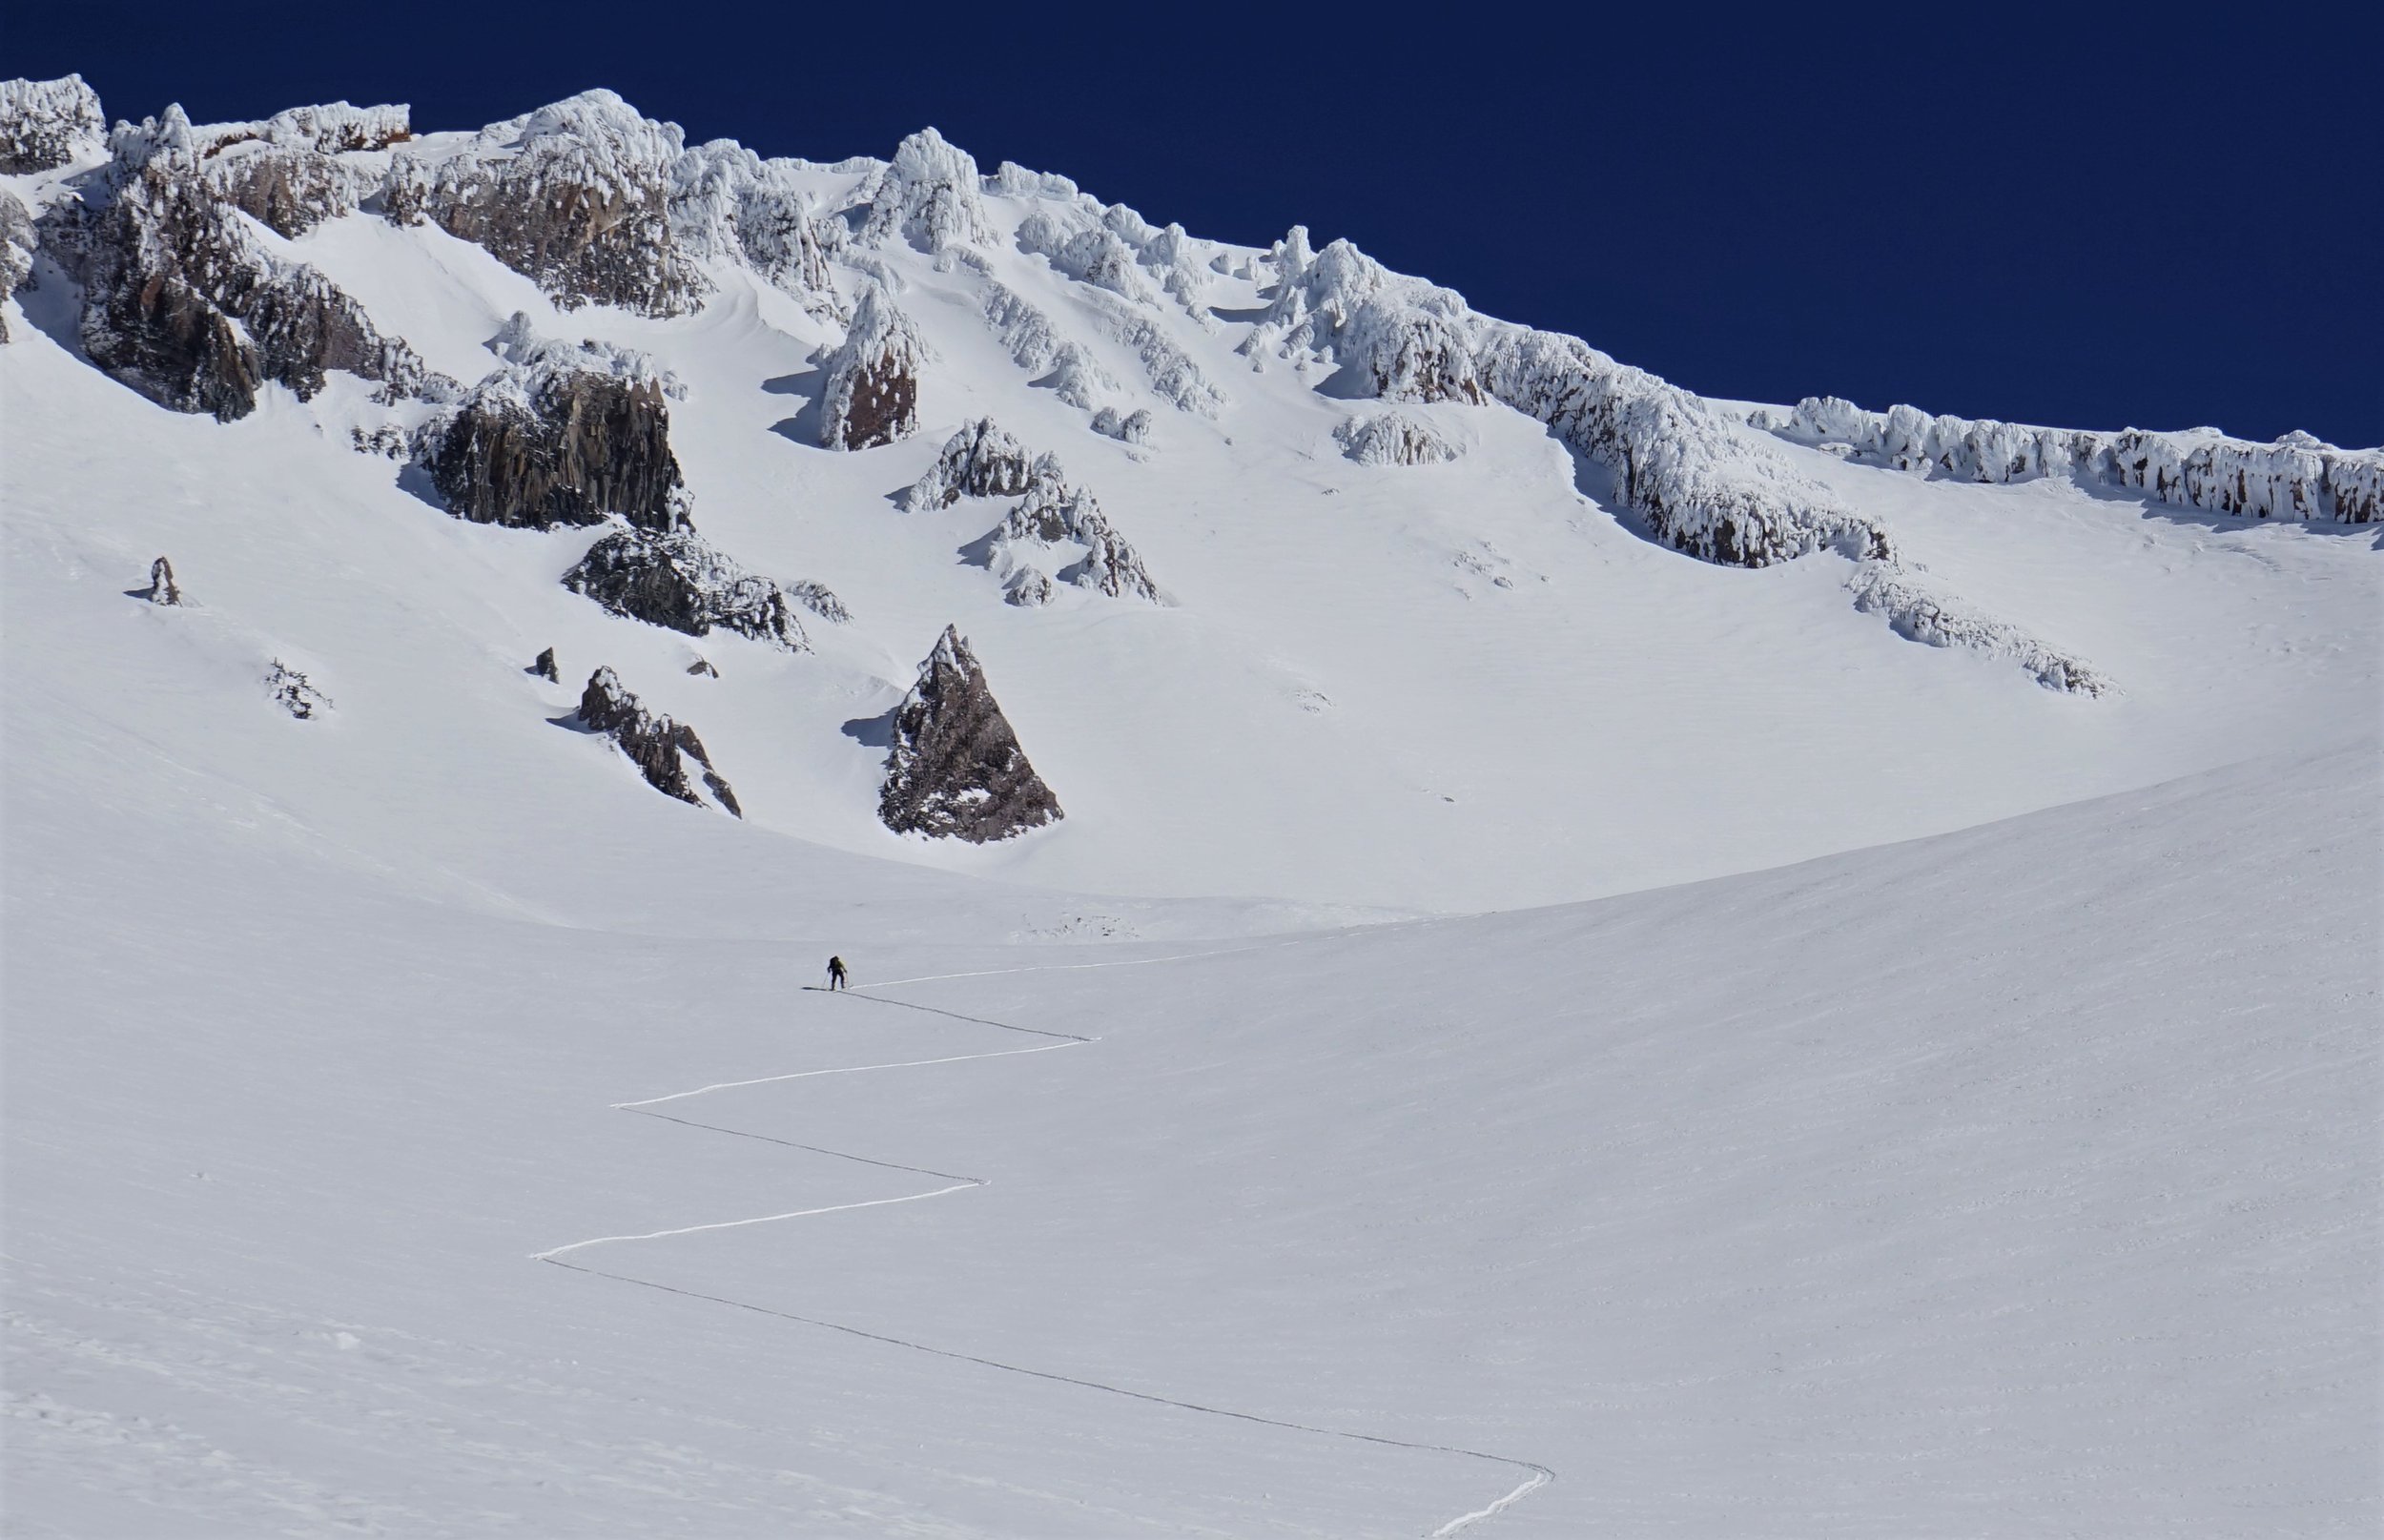 The vast ridge of mount shasta while climbing up avalanche gulch